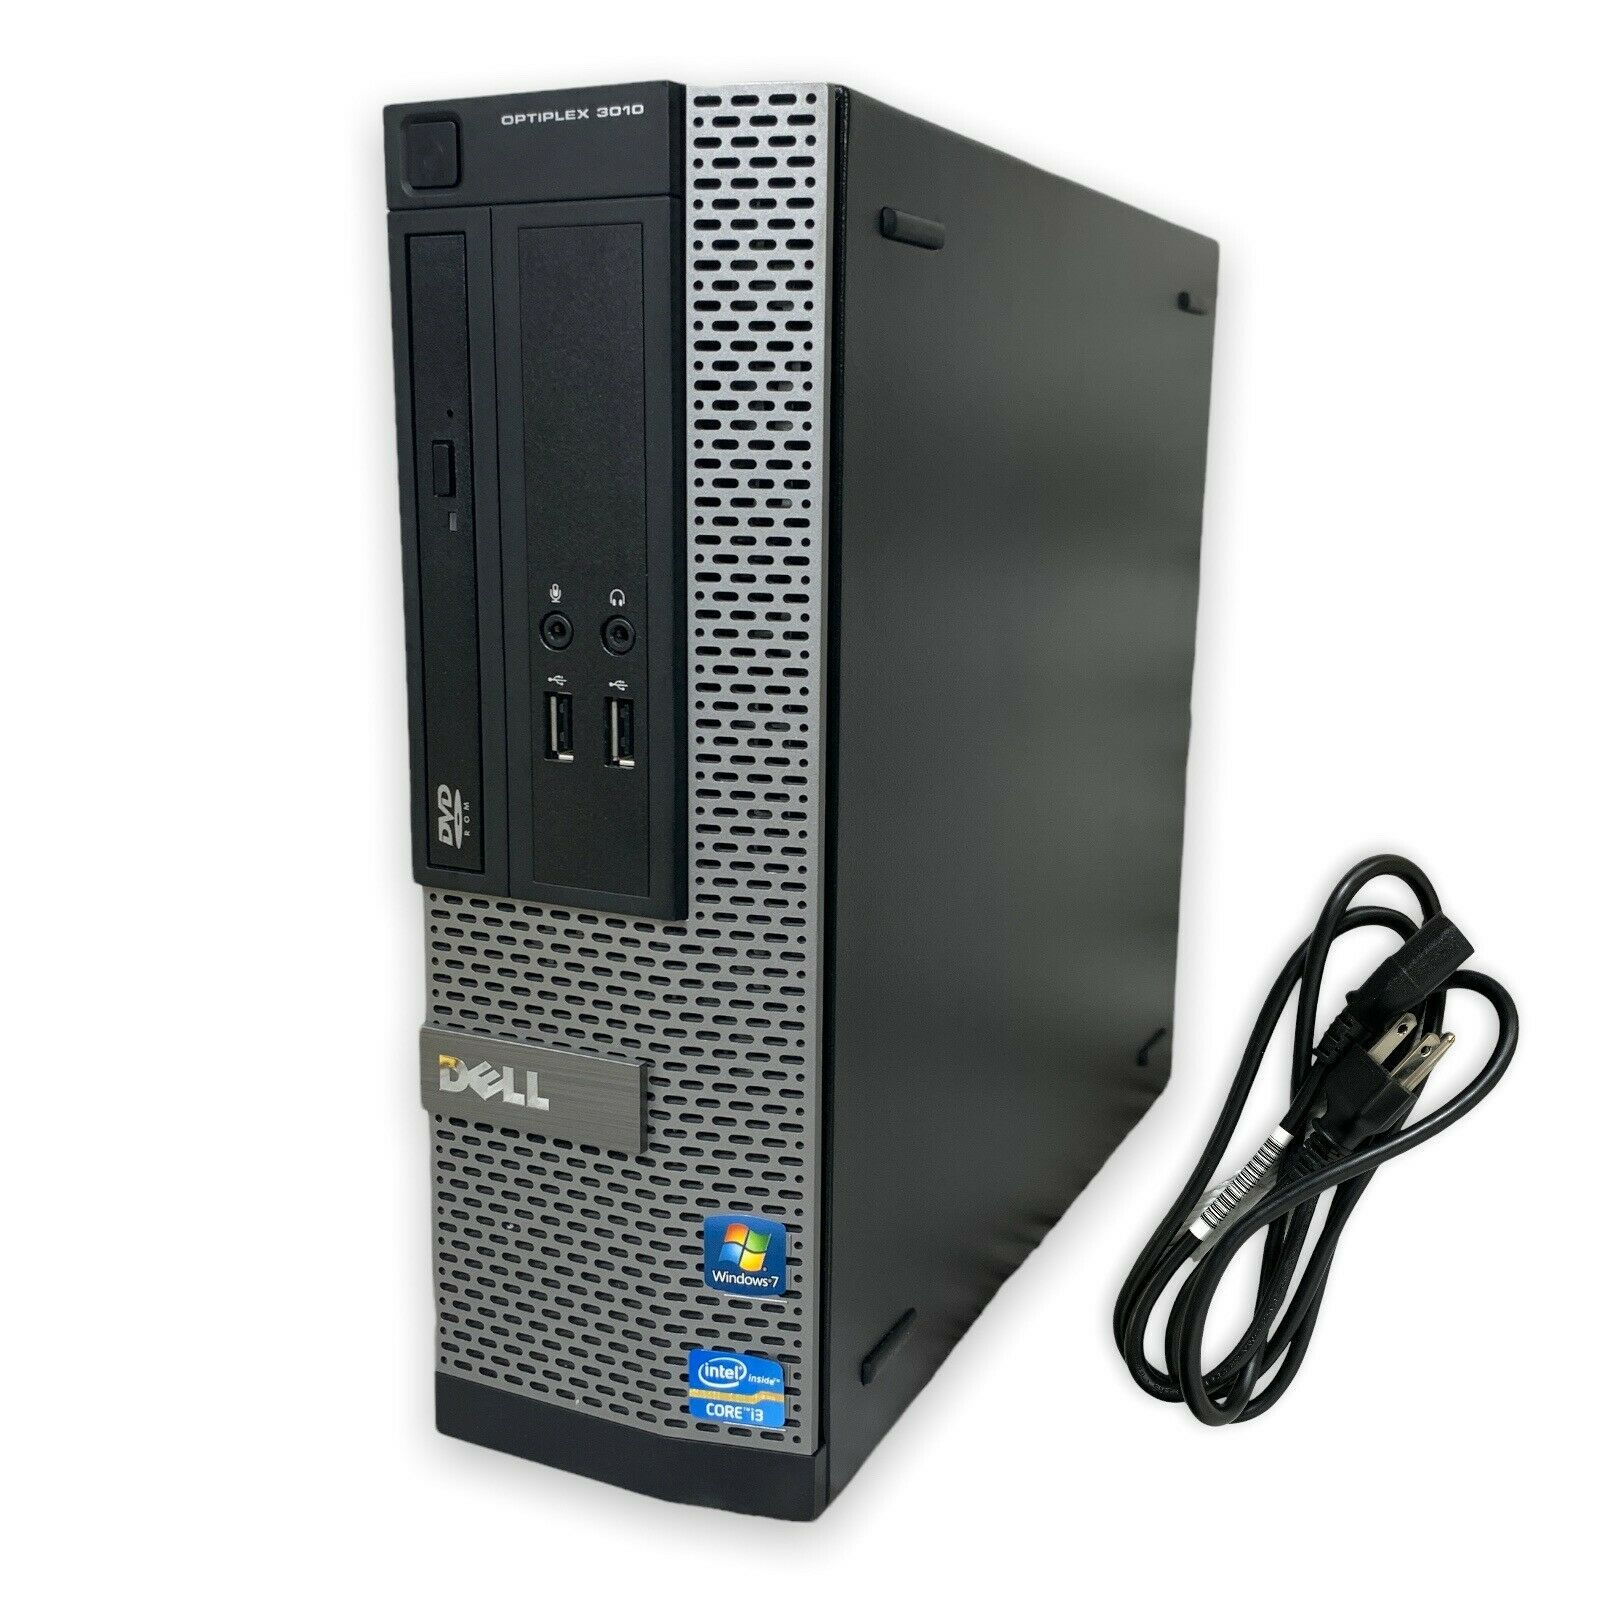 Dell Optiplex 3010 SFF i3-3220 3.2GHz 8GB RAM 500GB HDD Windows10 Pro PC Desktop